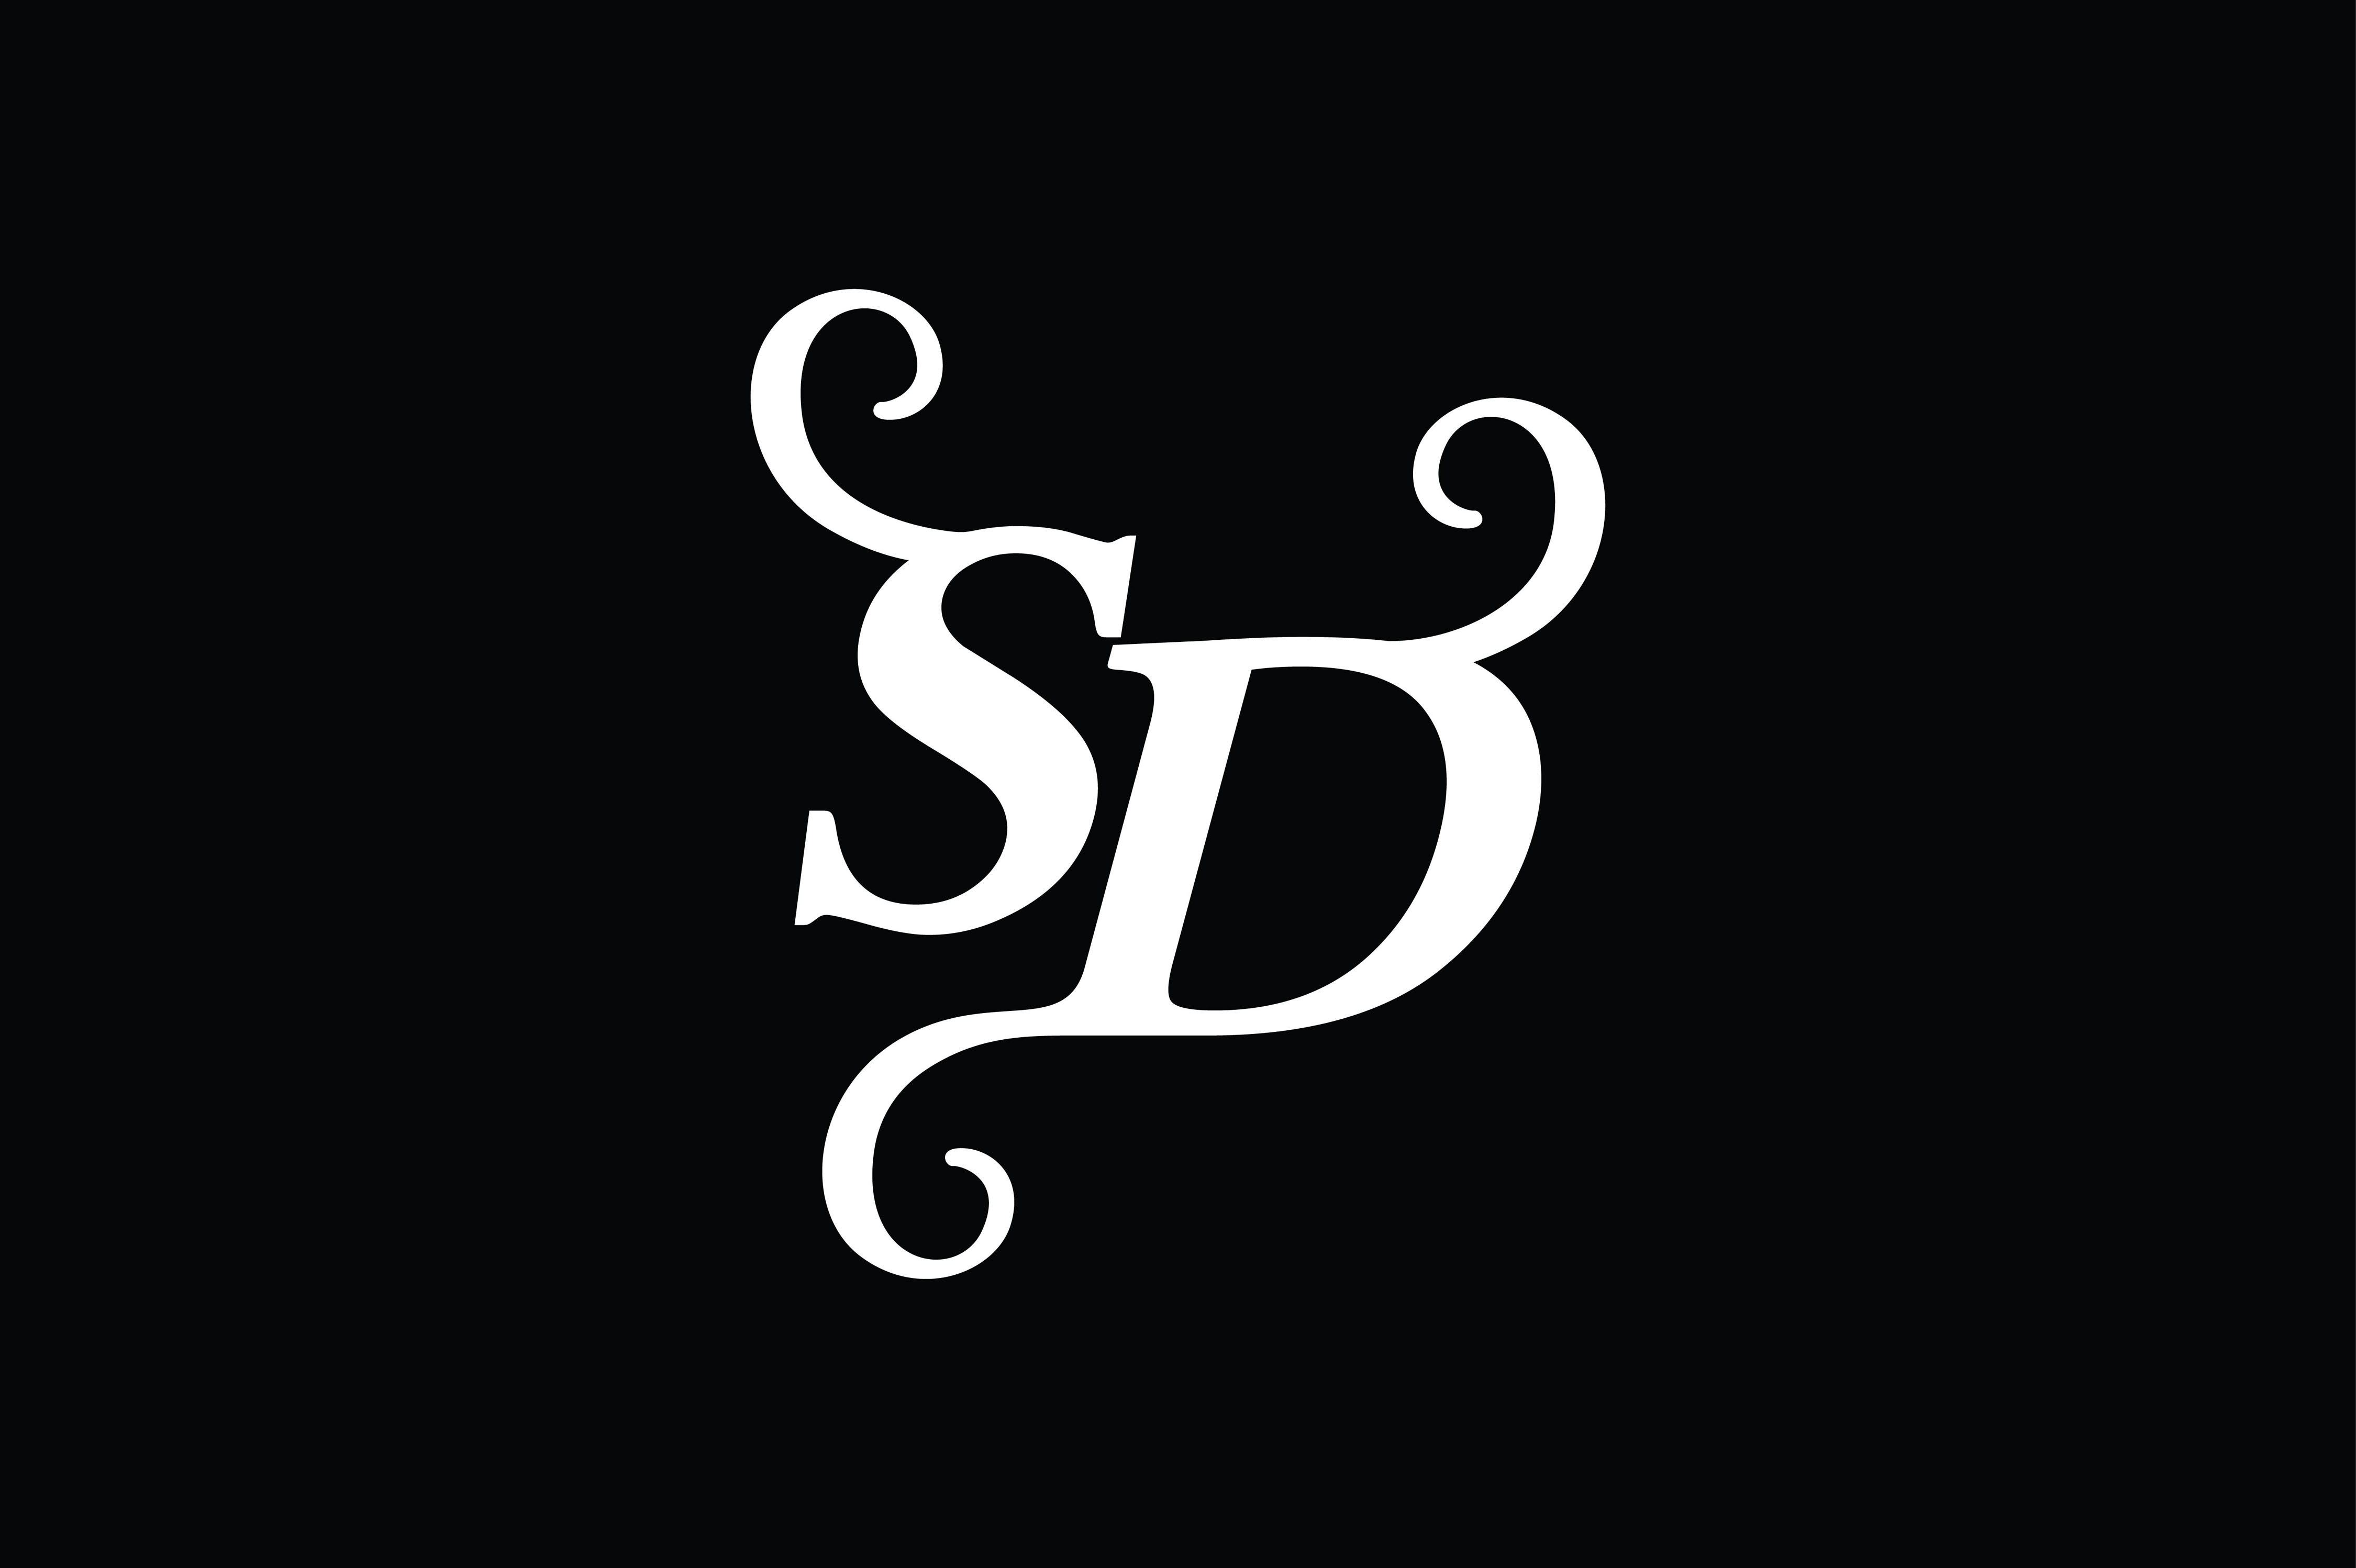 Monogram SD Logo V2 Graphic by Greenlines Studios · Creative Fabrica